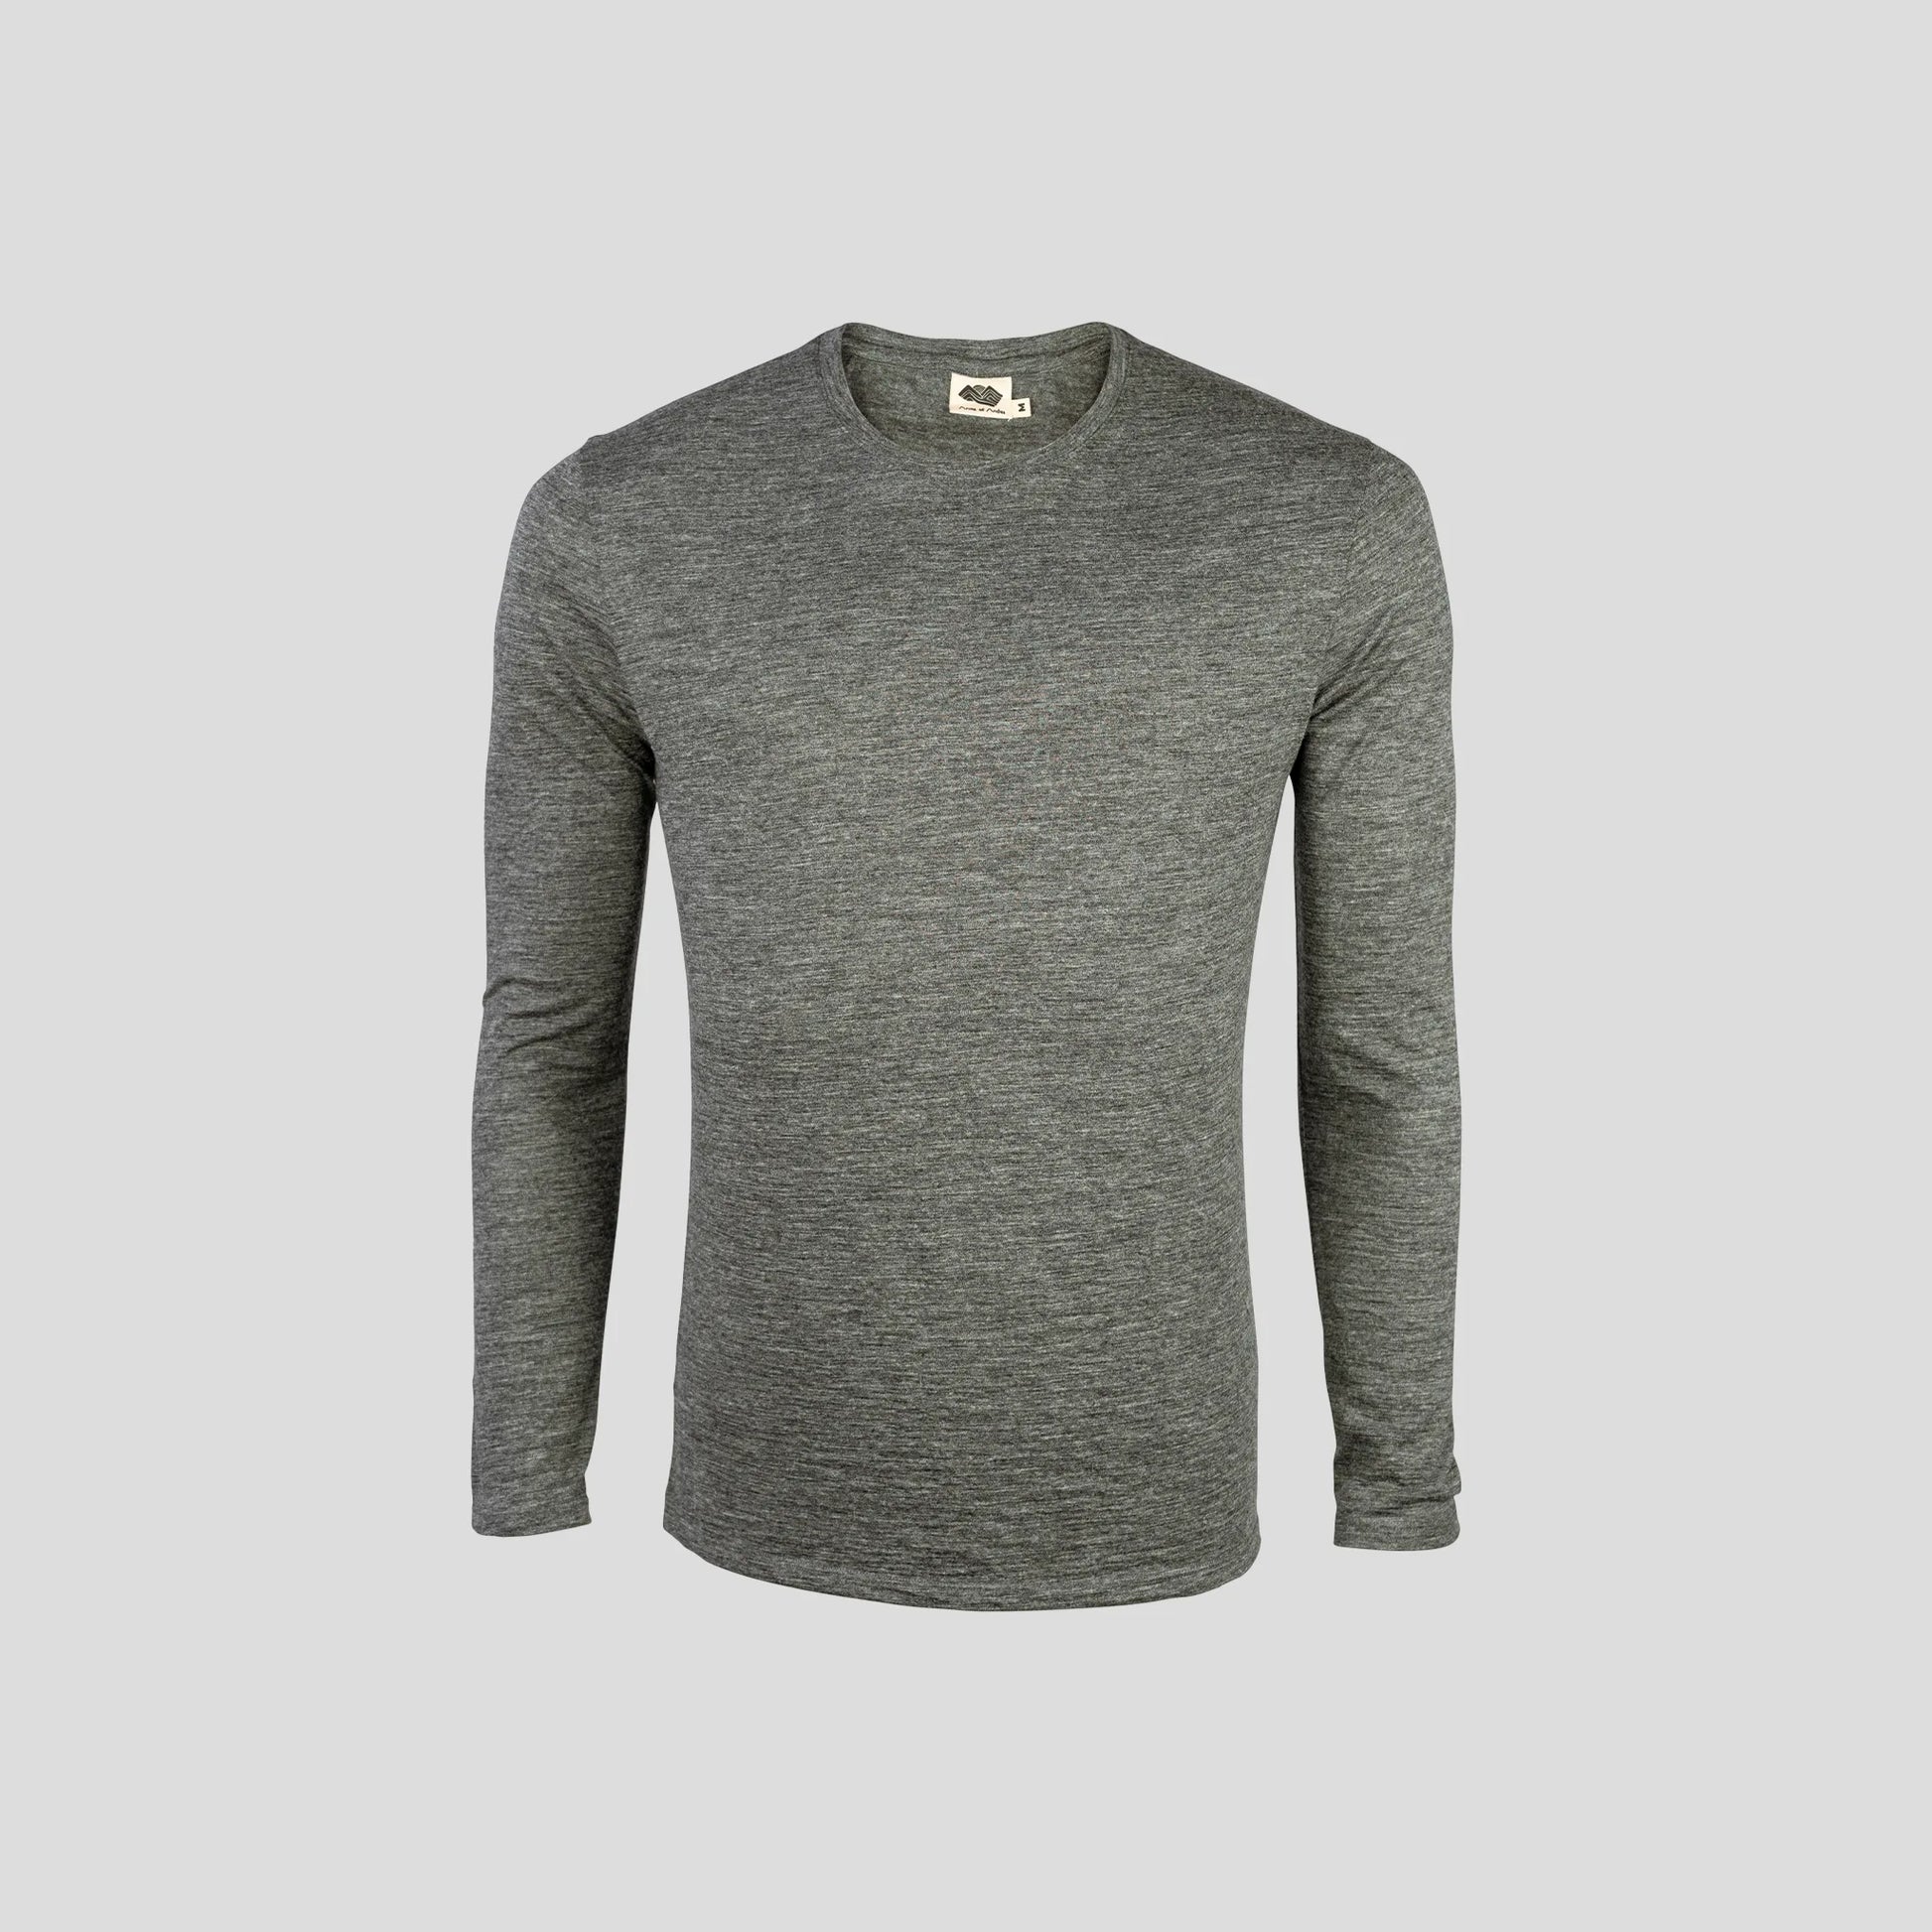 3 Pack - Men's Alpaca Wool Long Sleeve Shirt: 160 Ultralight cover